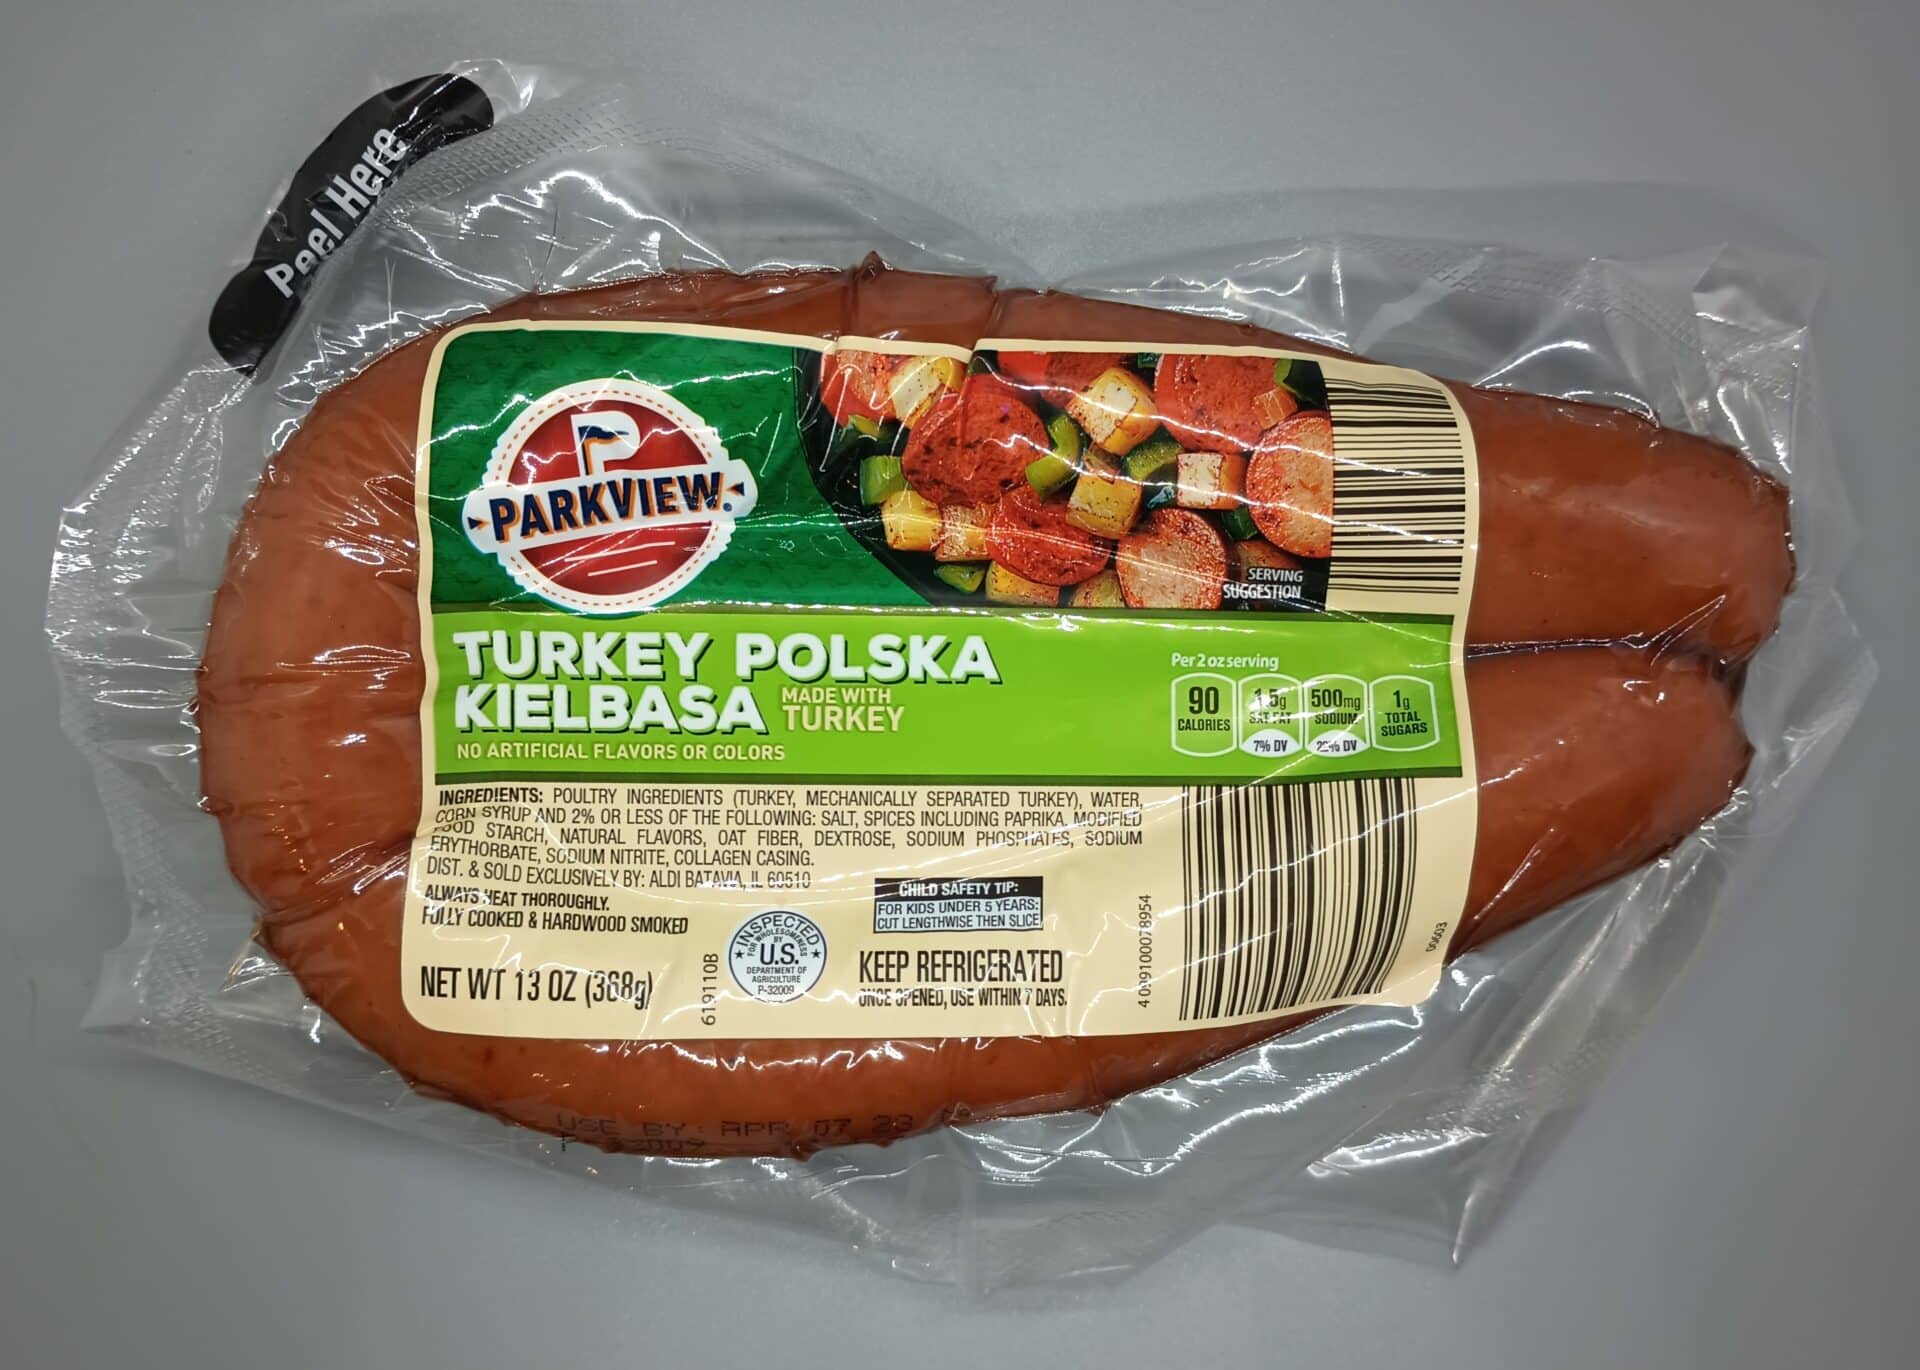 Parkview Turkey Polska Kielbasa